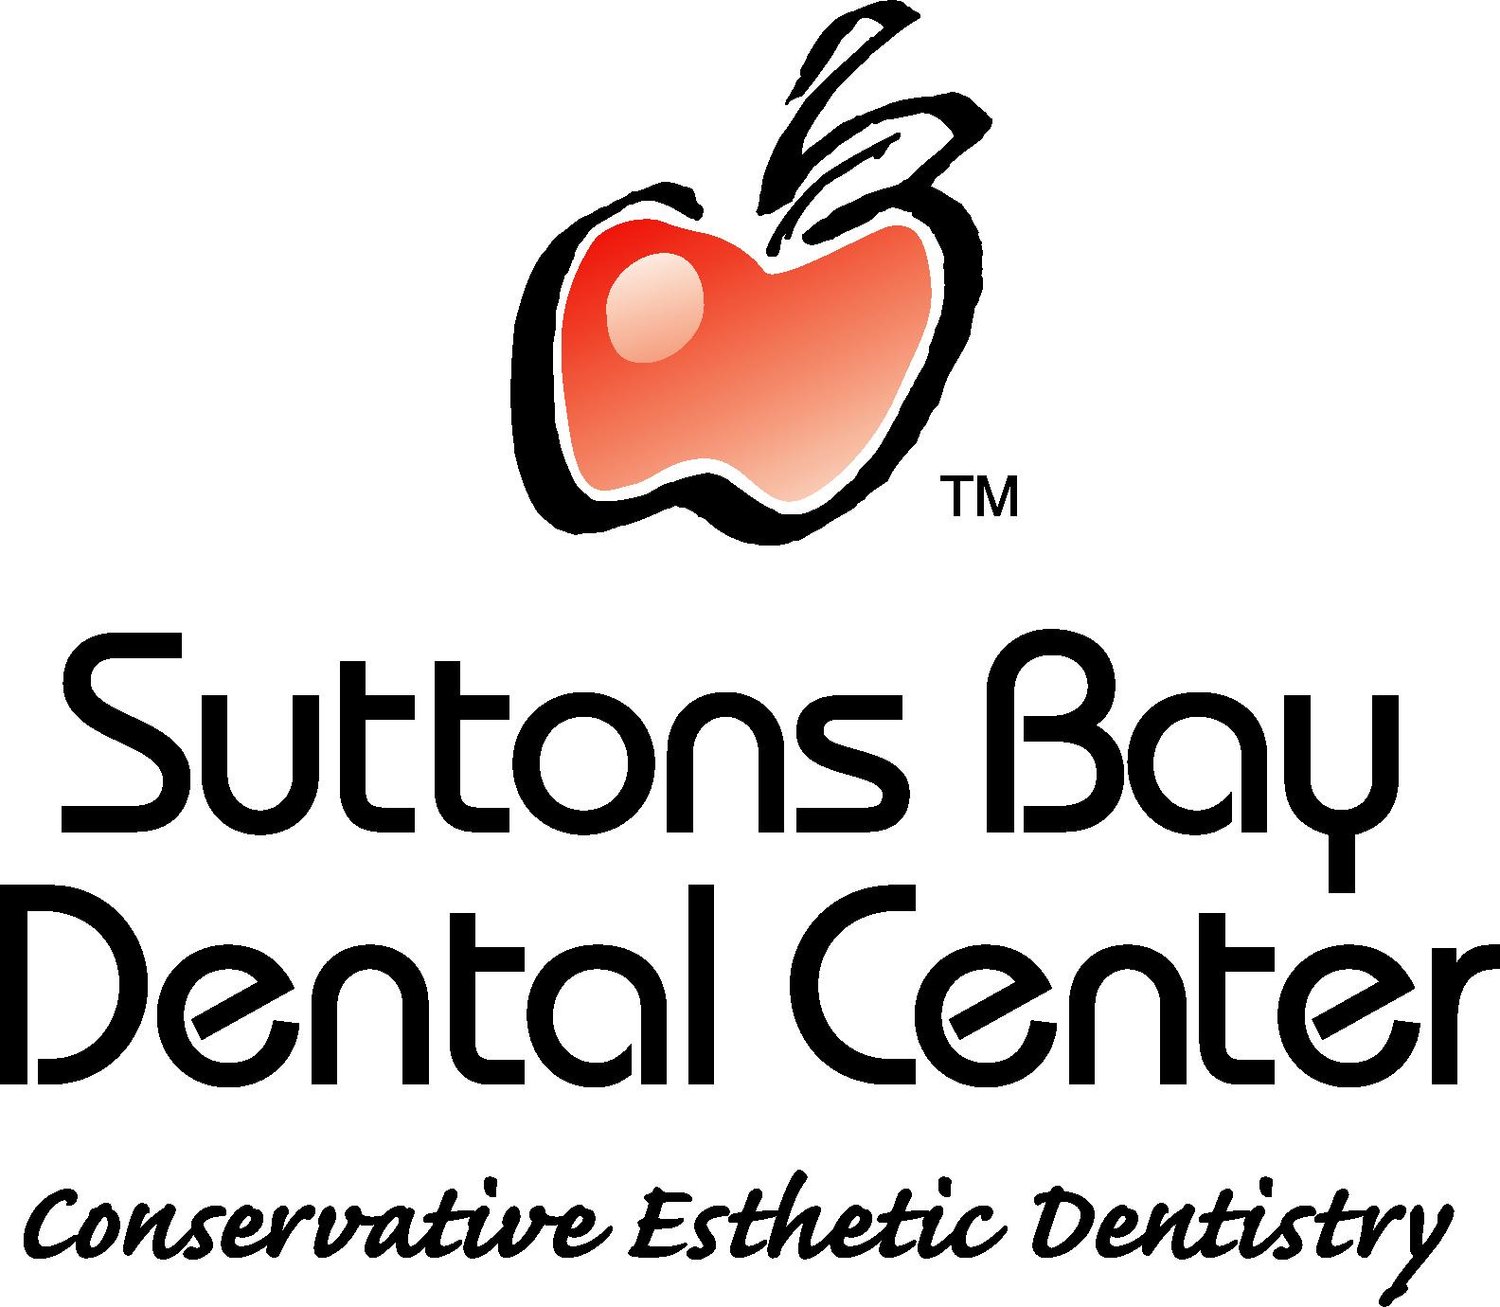 Suttons Bay Dental Center